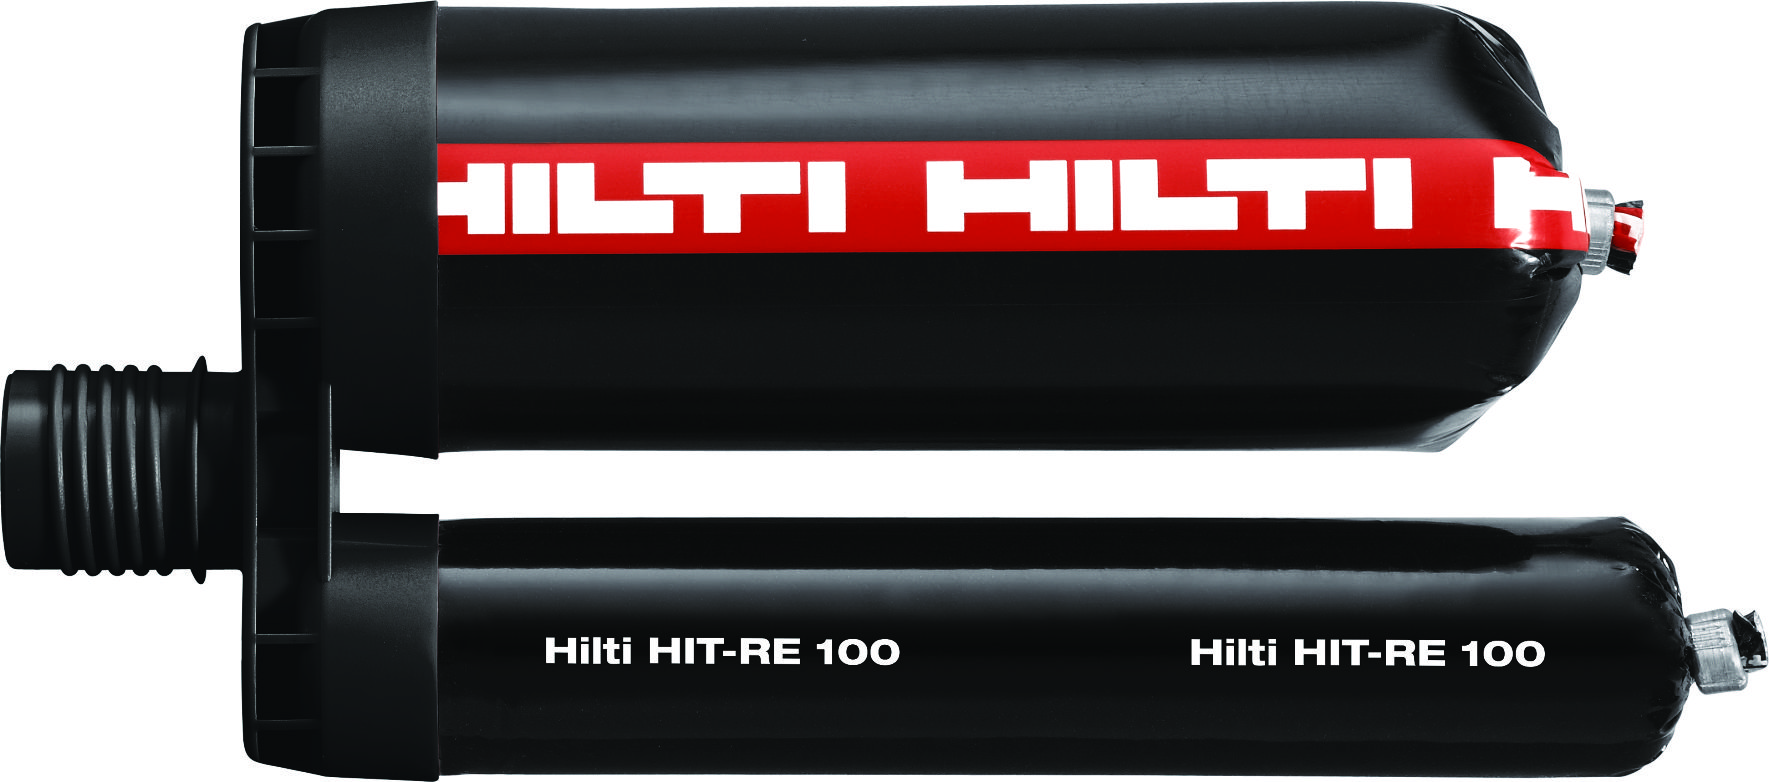 Hilti HIT-RE 100